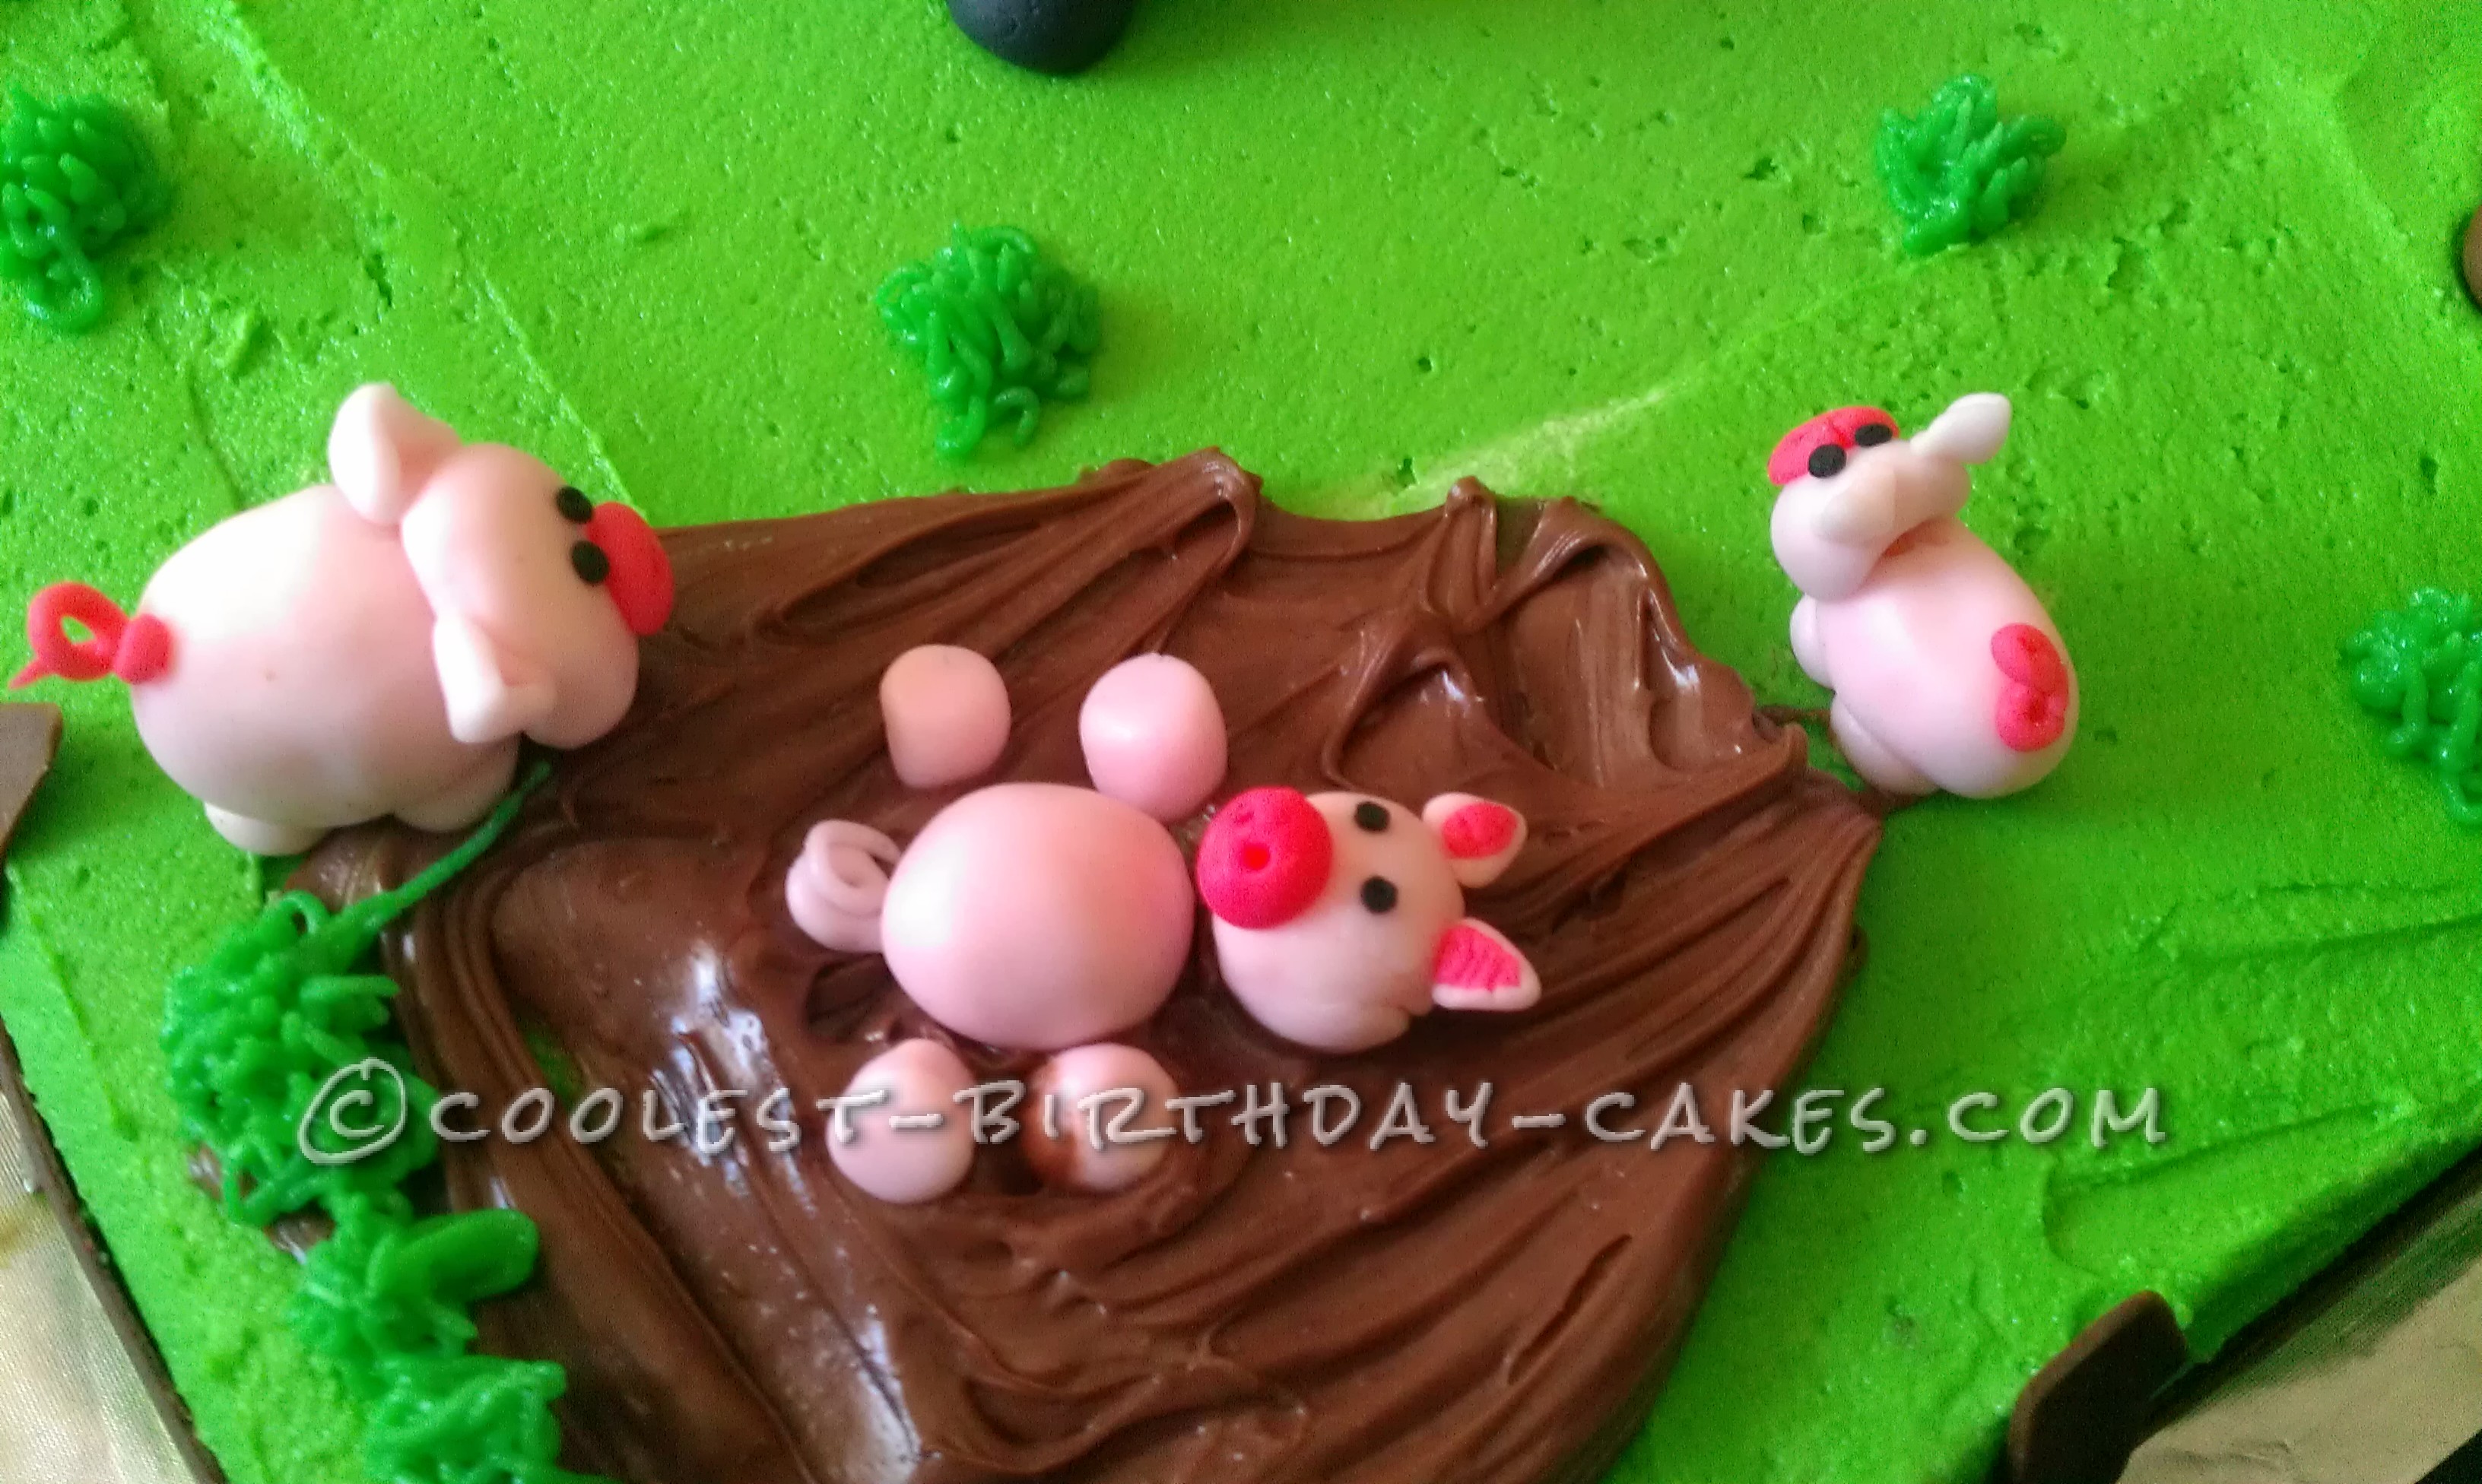 Coolest Farm Scene Birthday Cake